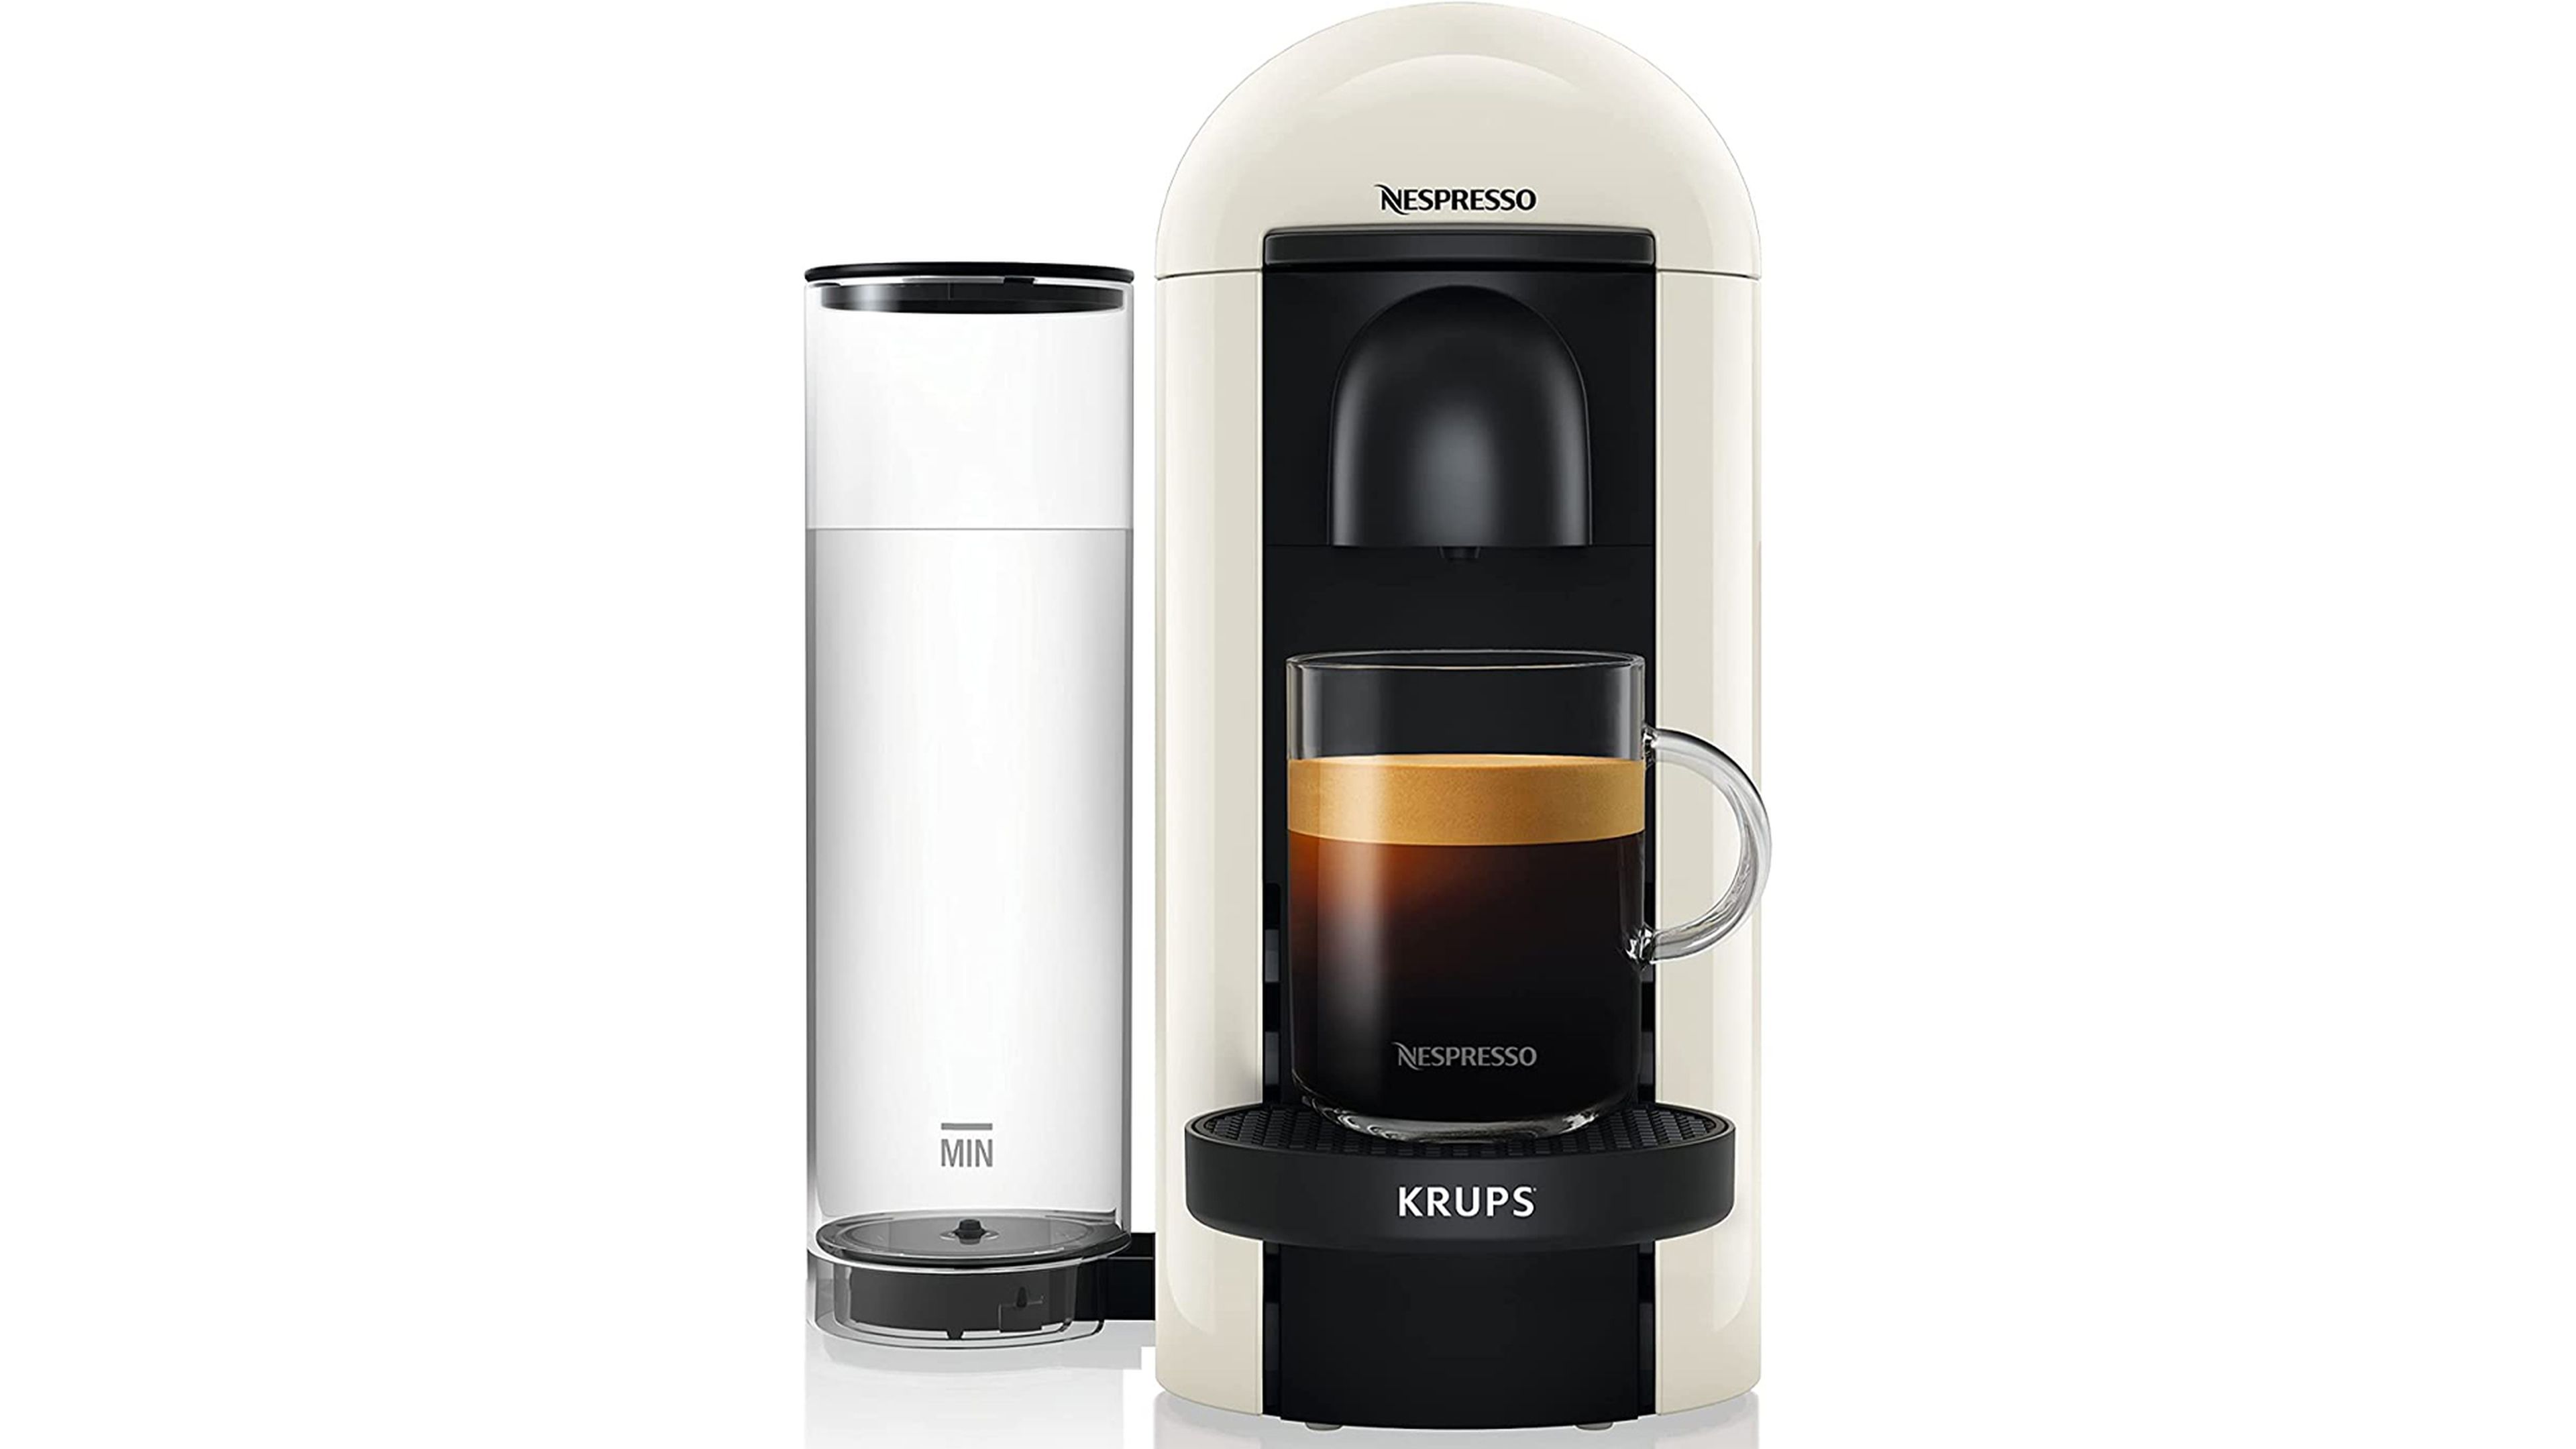 Krups Nespresso Vertuo Plus XN9031